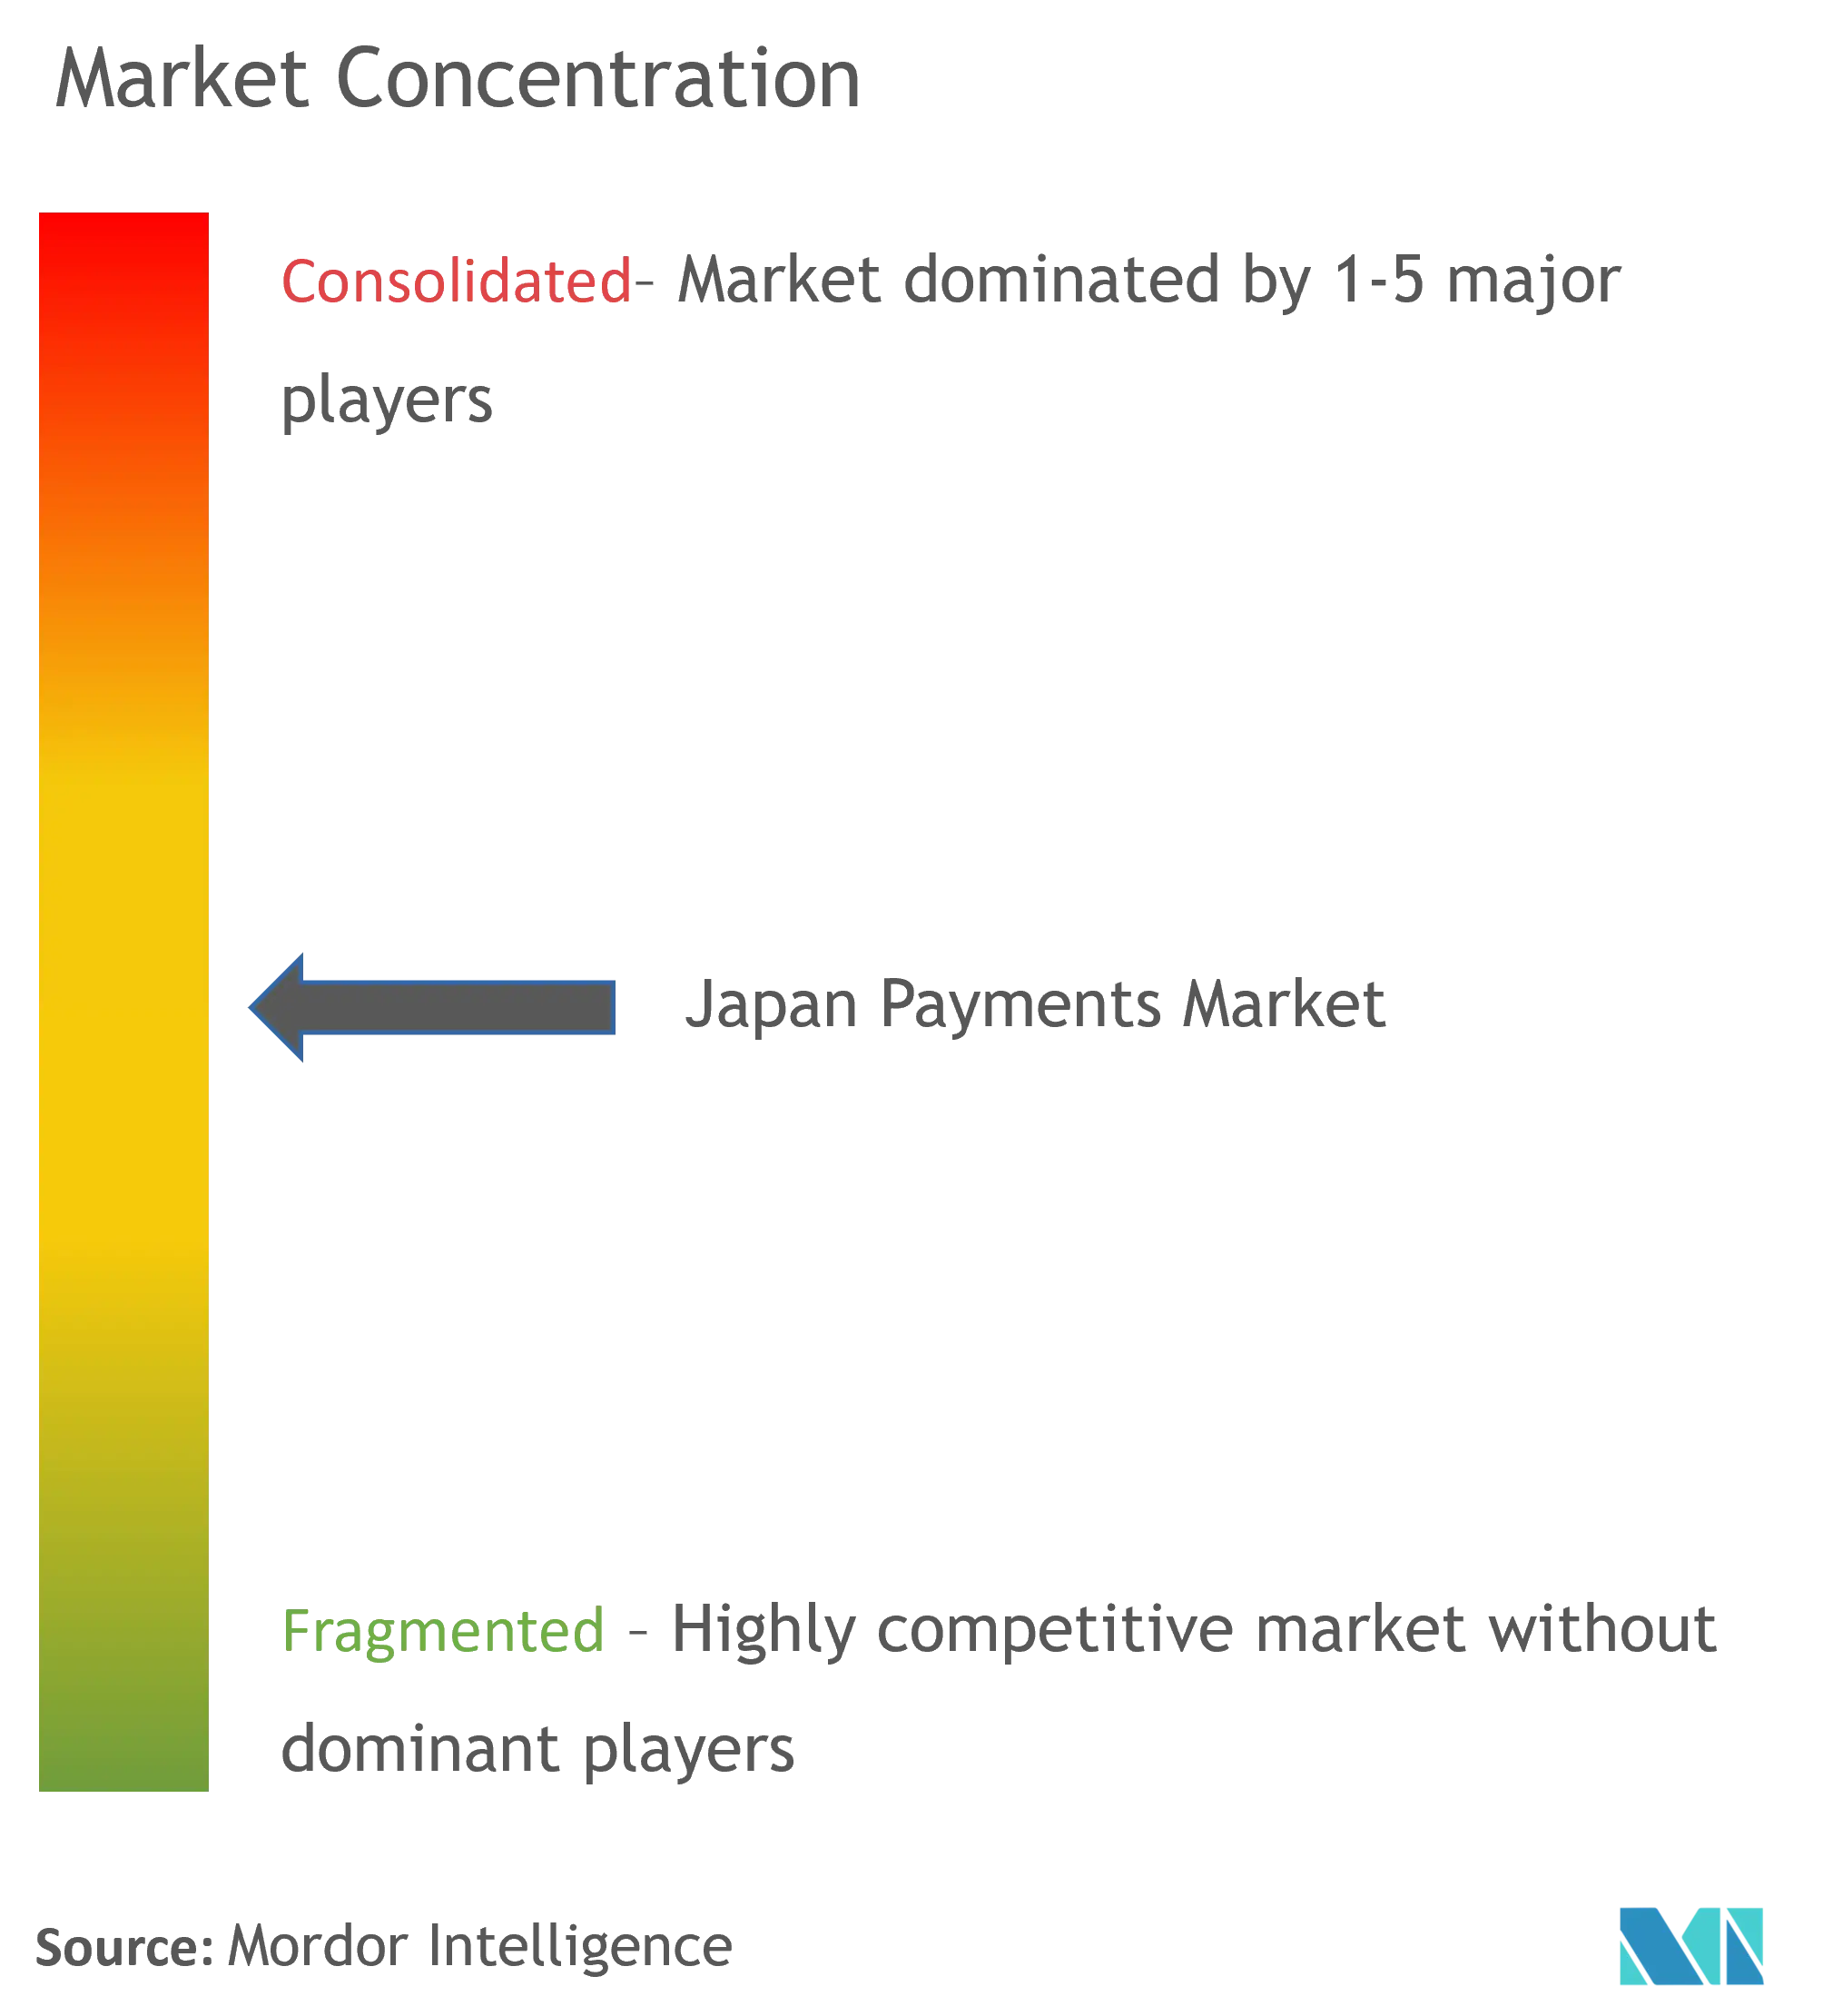 Japan Payments Market Concentration